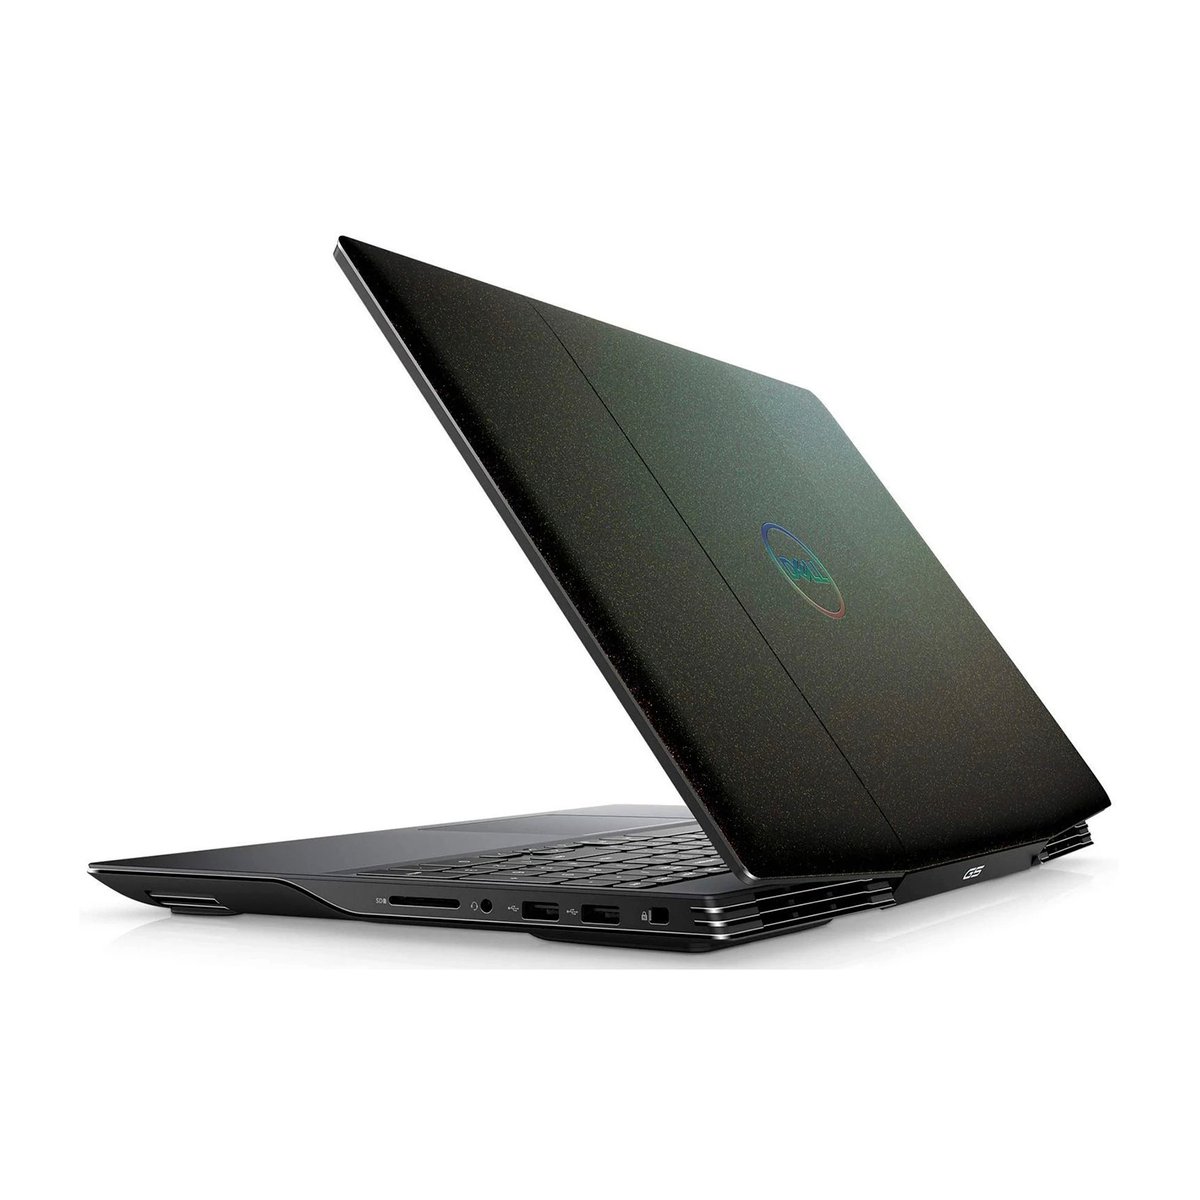 Dell G5-5500-E1700 15.6" FHD Gaming Laptop, 144Hz Refresh Rate, Intel Core i7 10750H 2.60 Ghz, 16GB RAM, 512 SSD, 6GB NVIDIA Graphics GTX 1660, Windows 10 Home - Black I 5500-G5-E1700-BLKC